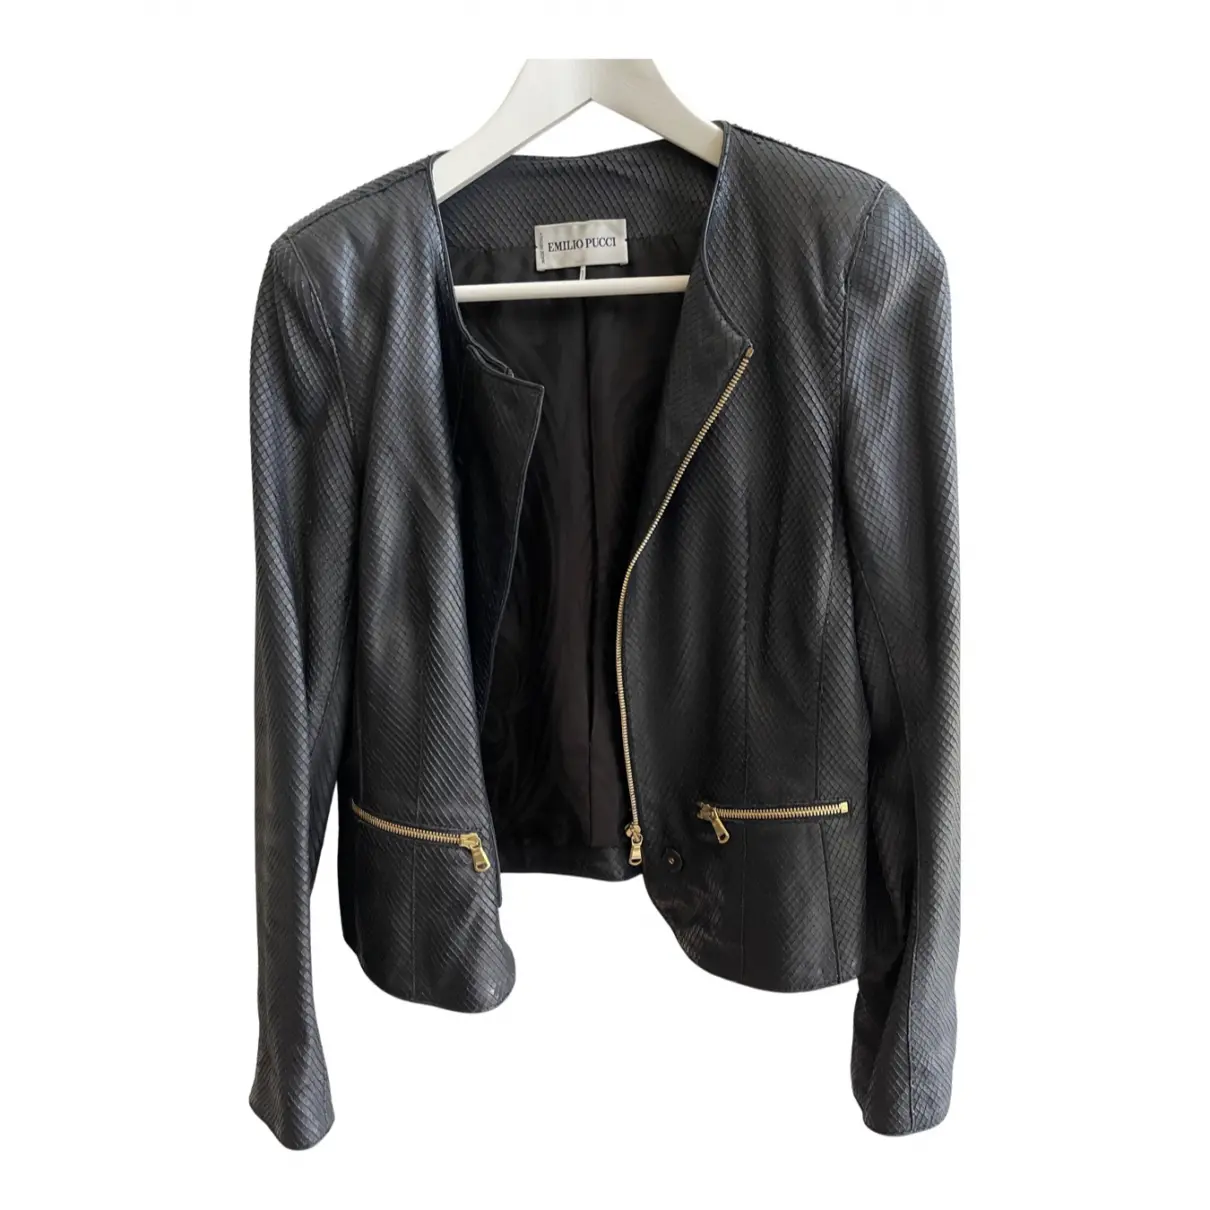 Buy Emilio Pucci Leather biker jacket online